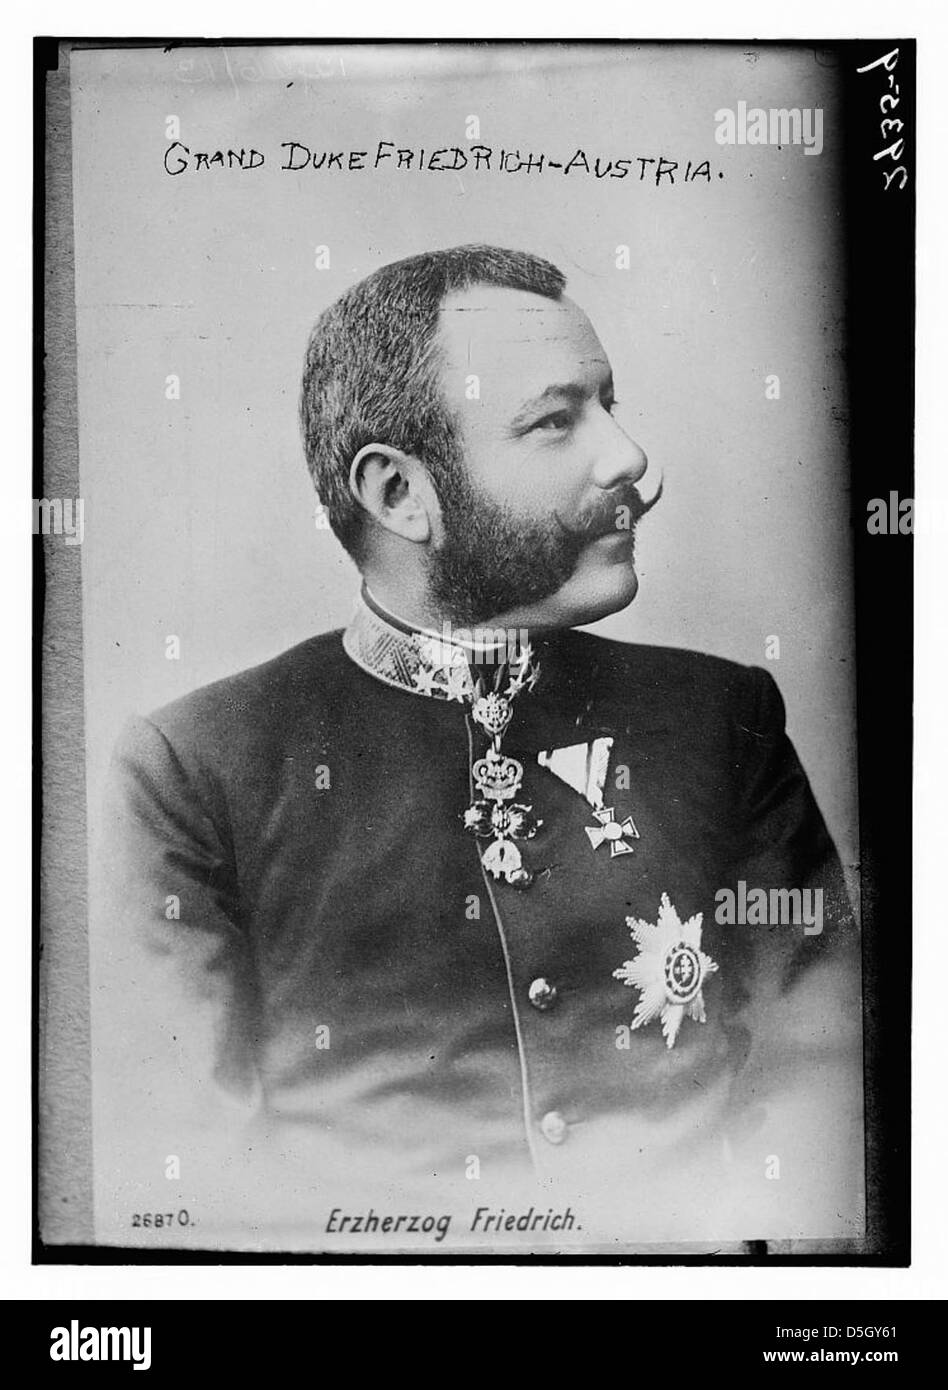 Grand Duke Friedrich - Austria (LOC) Stock Photo